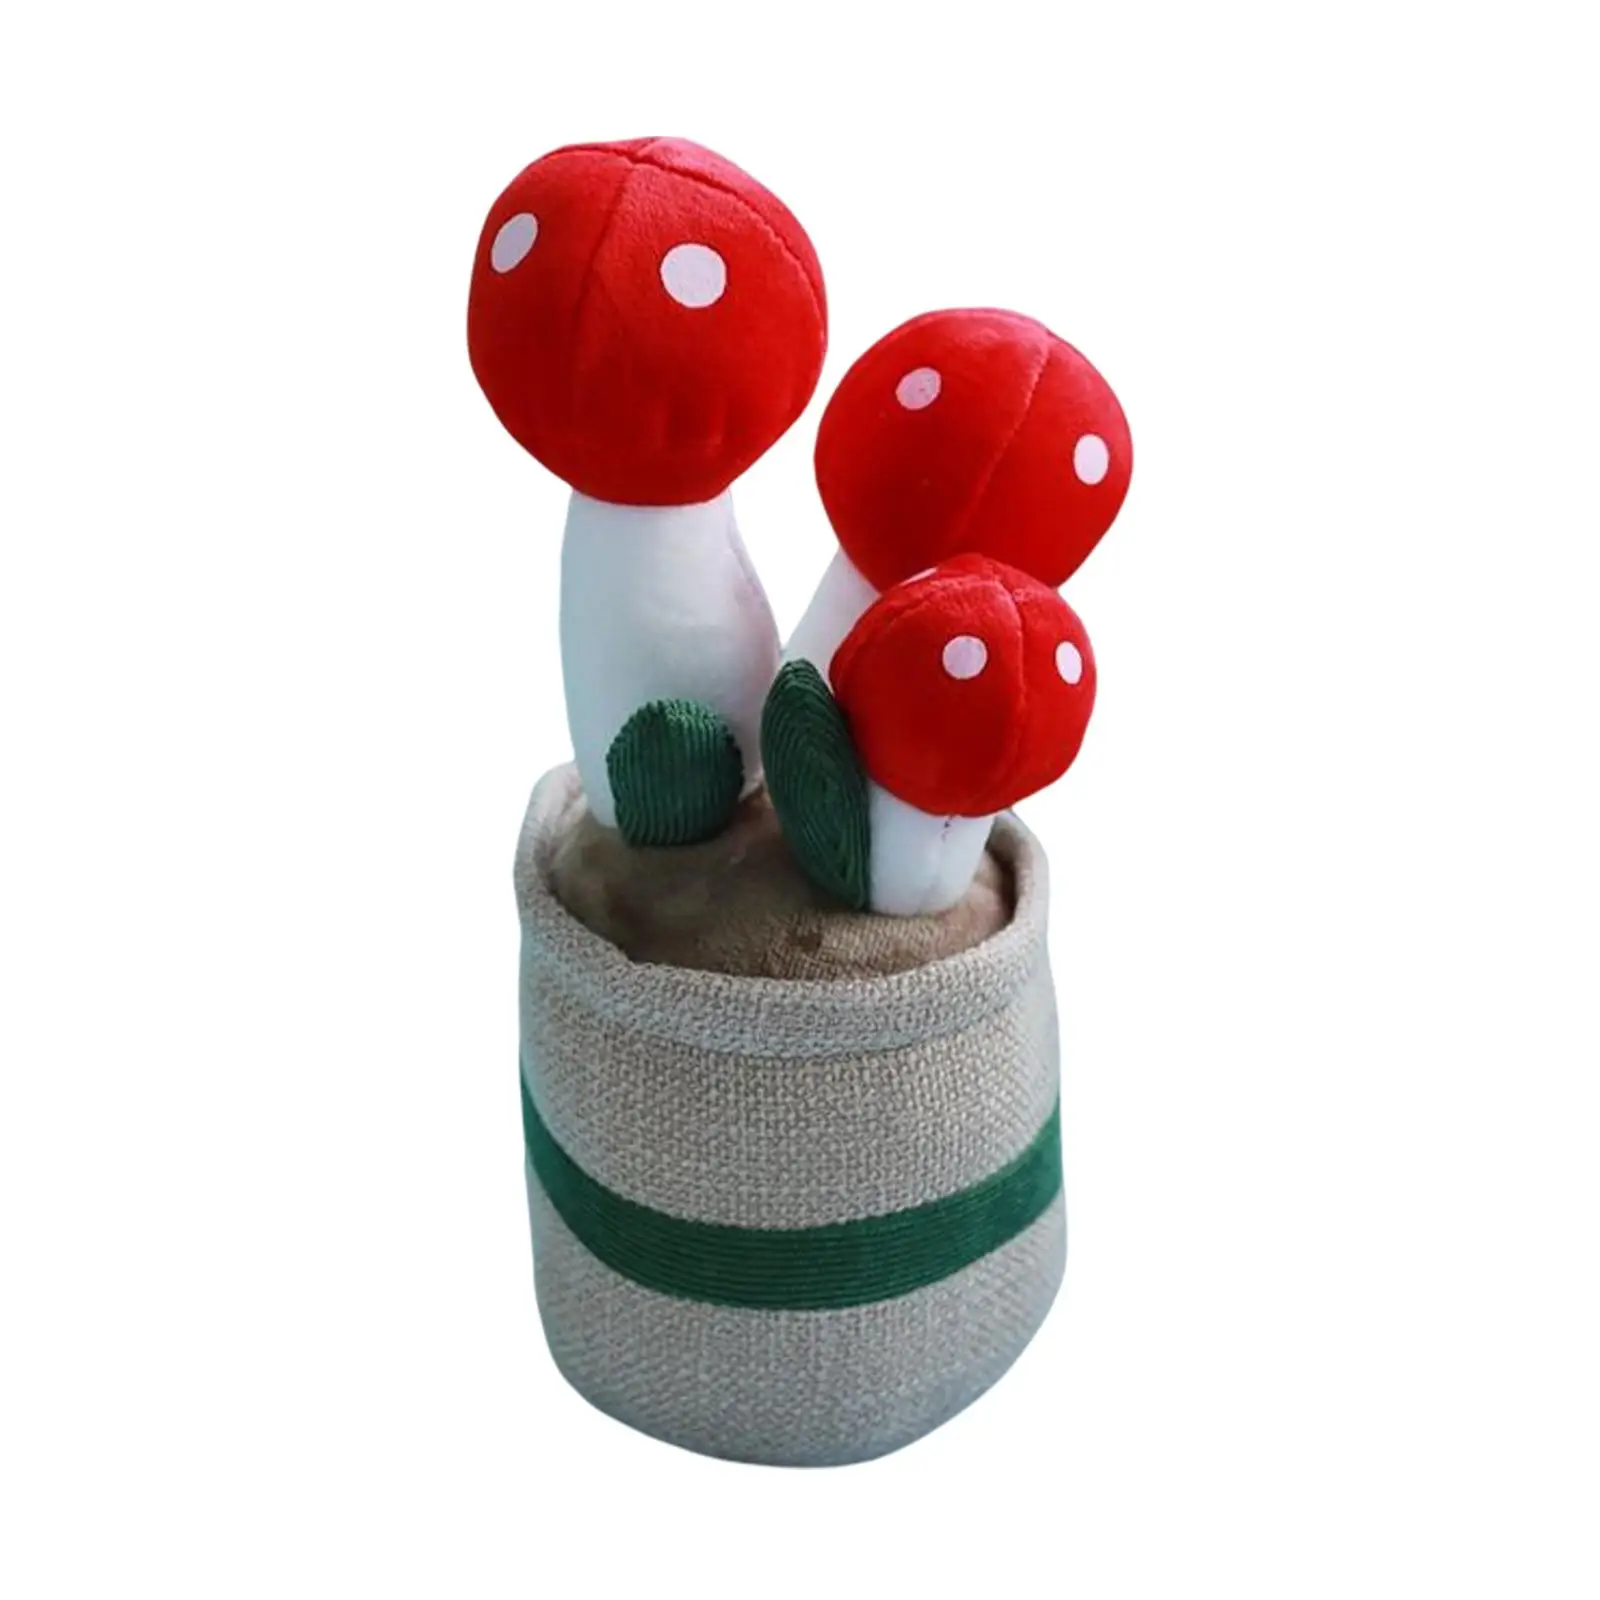 Mushroom Plush Toys Lifelike Soft Hugging Cushion Potted for Tabletop Bedroom Office Friend